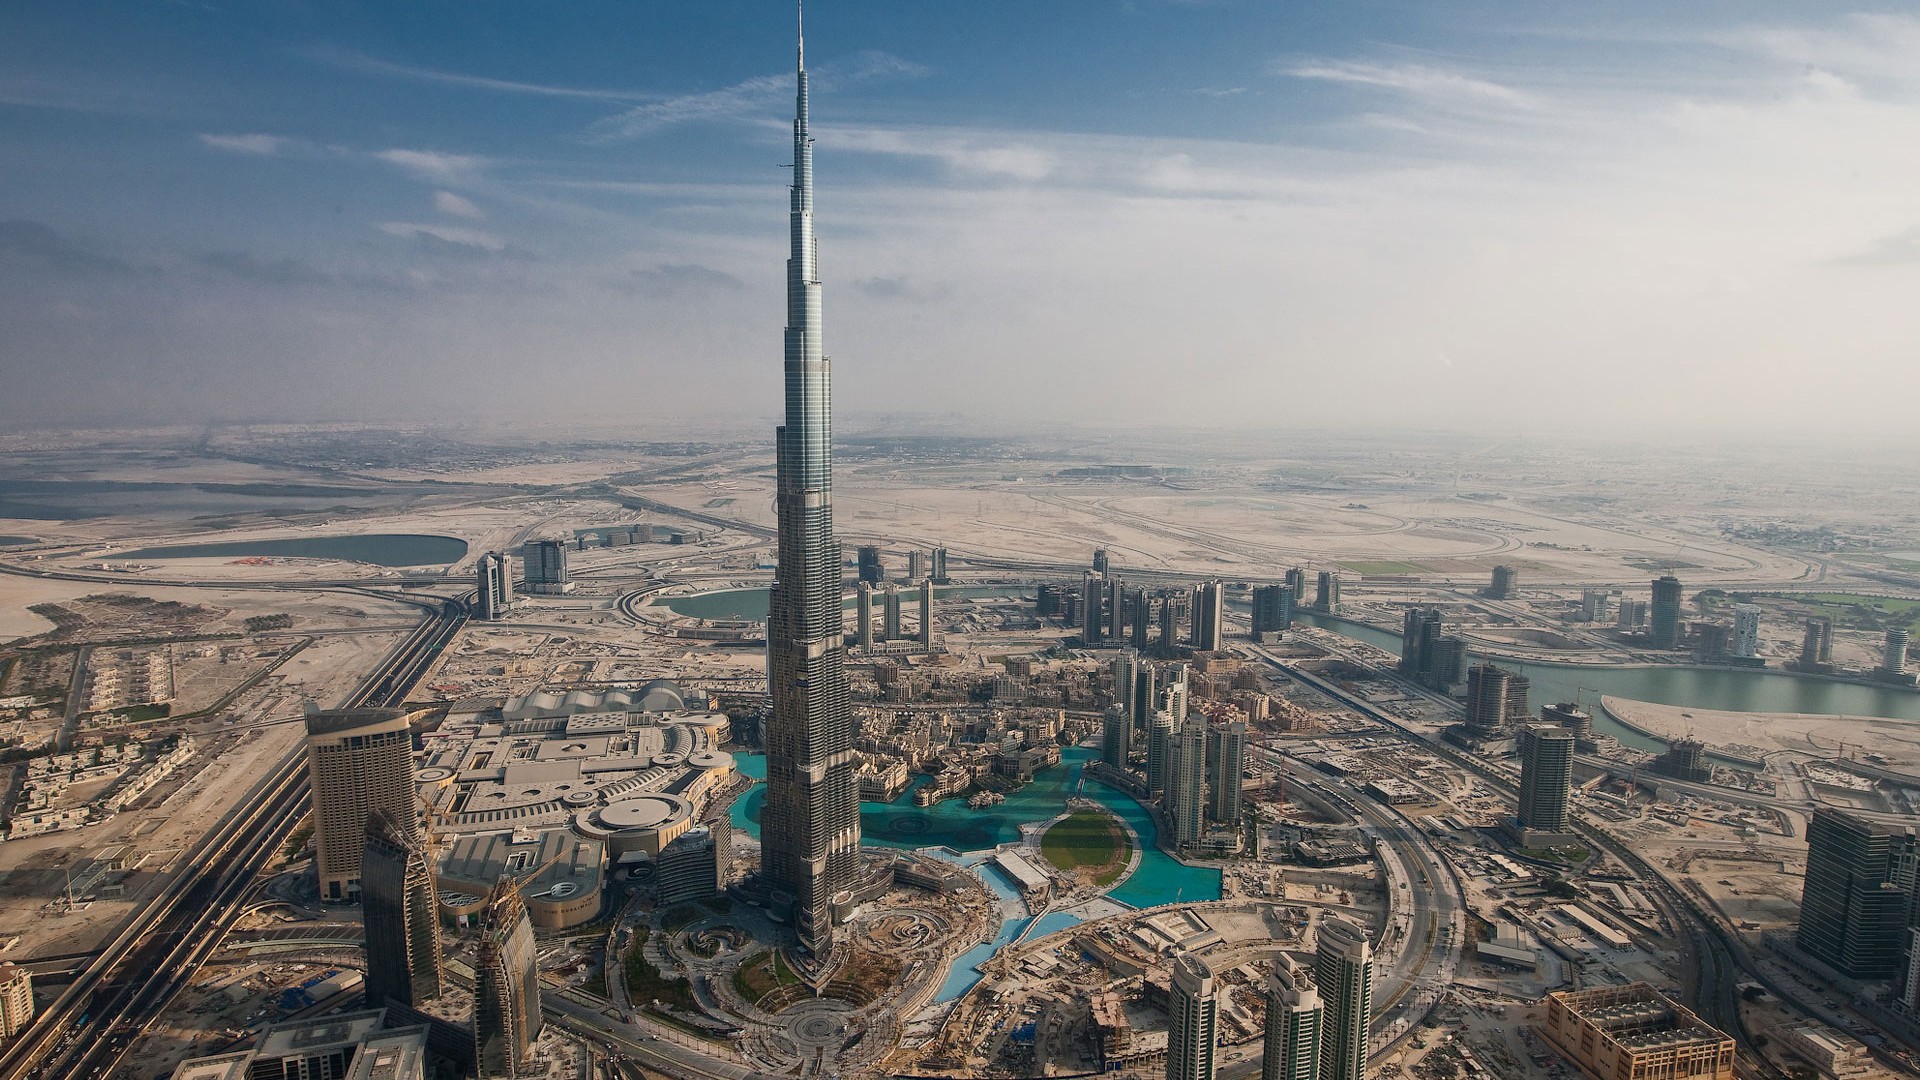 Wallpaper Burj Dubai Desktop And Make This For Your